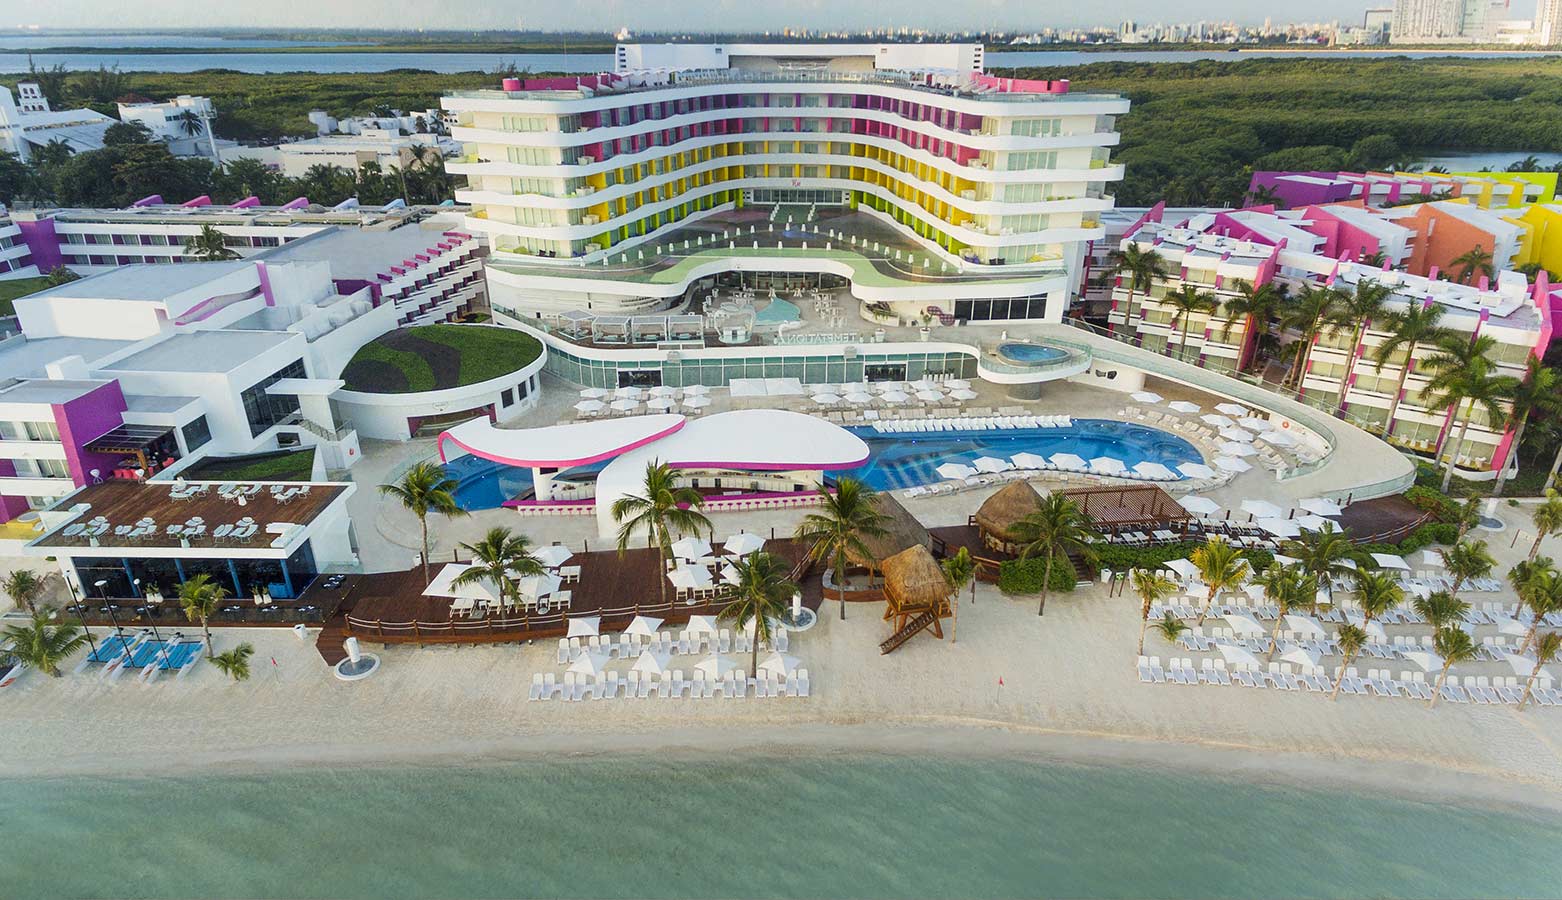 Temptation Cancun – Cancun - Temptation Cancun All Inclusive Resort